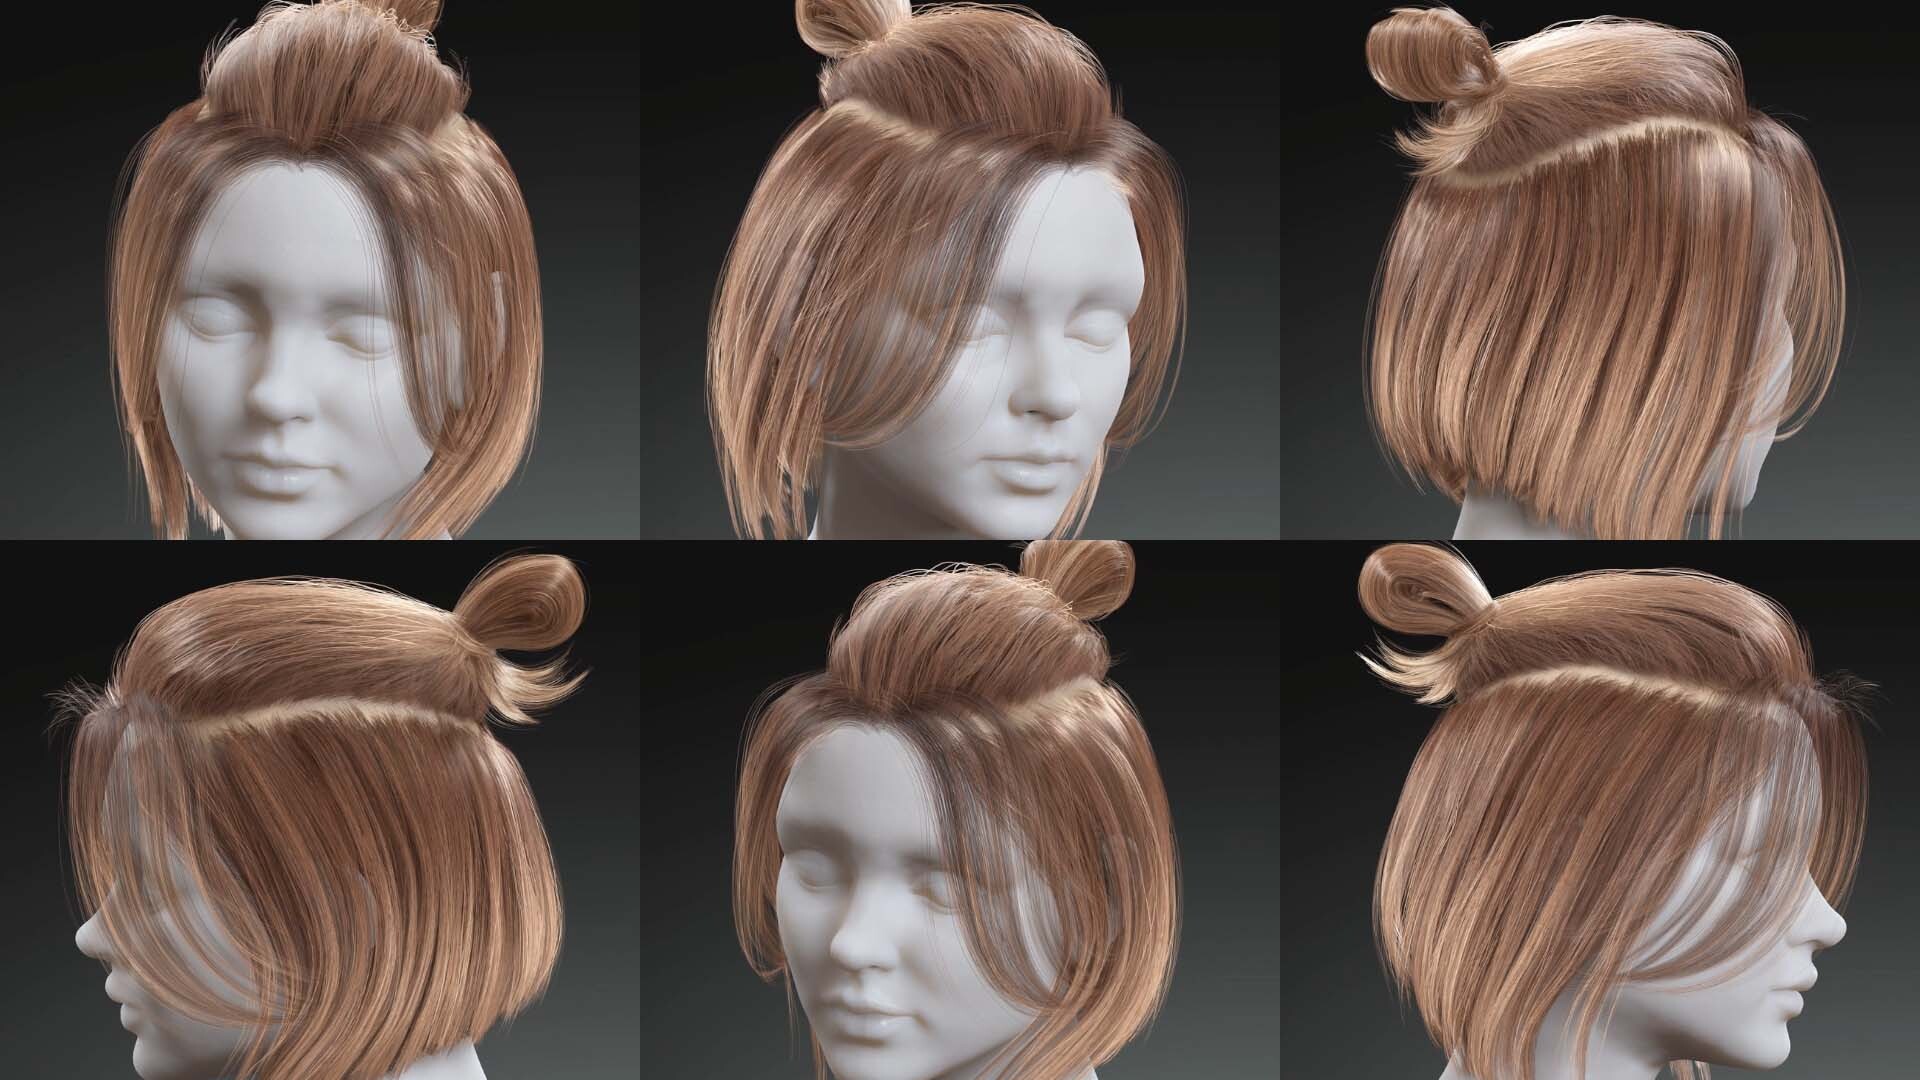 ArtStation - Realistic Short Hairstyle Female